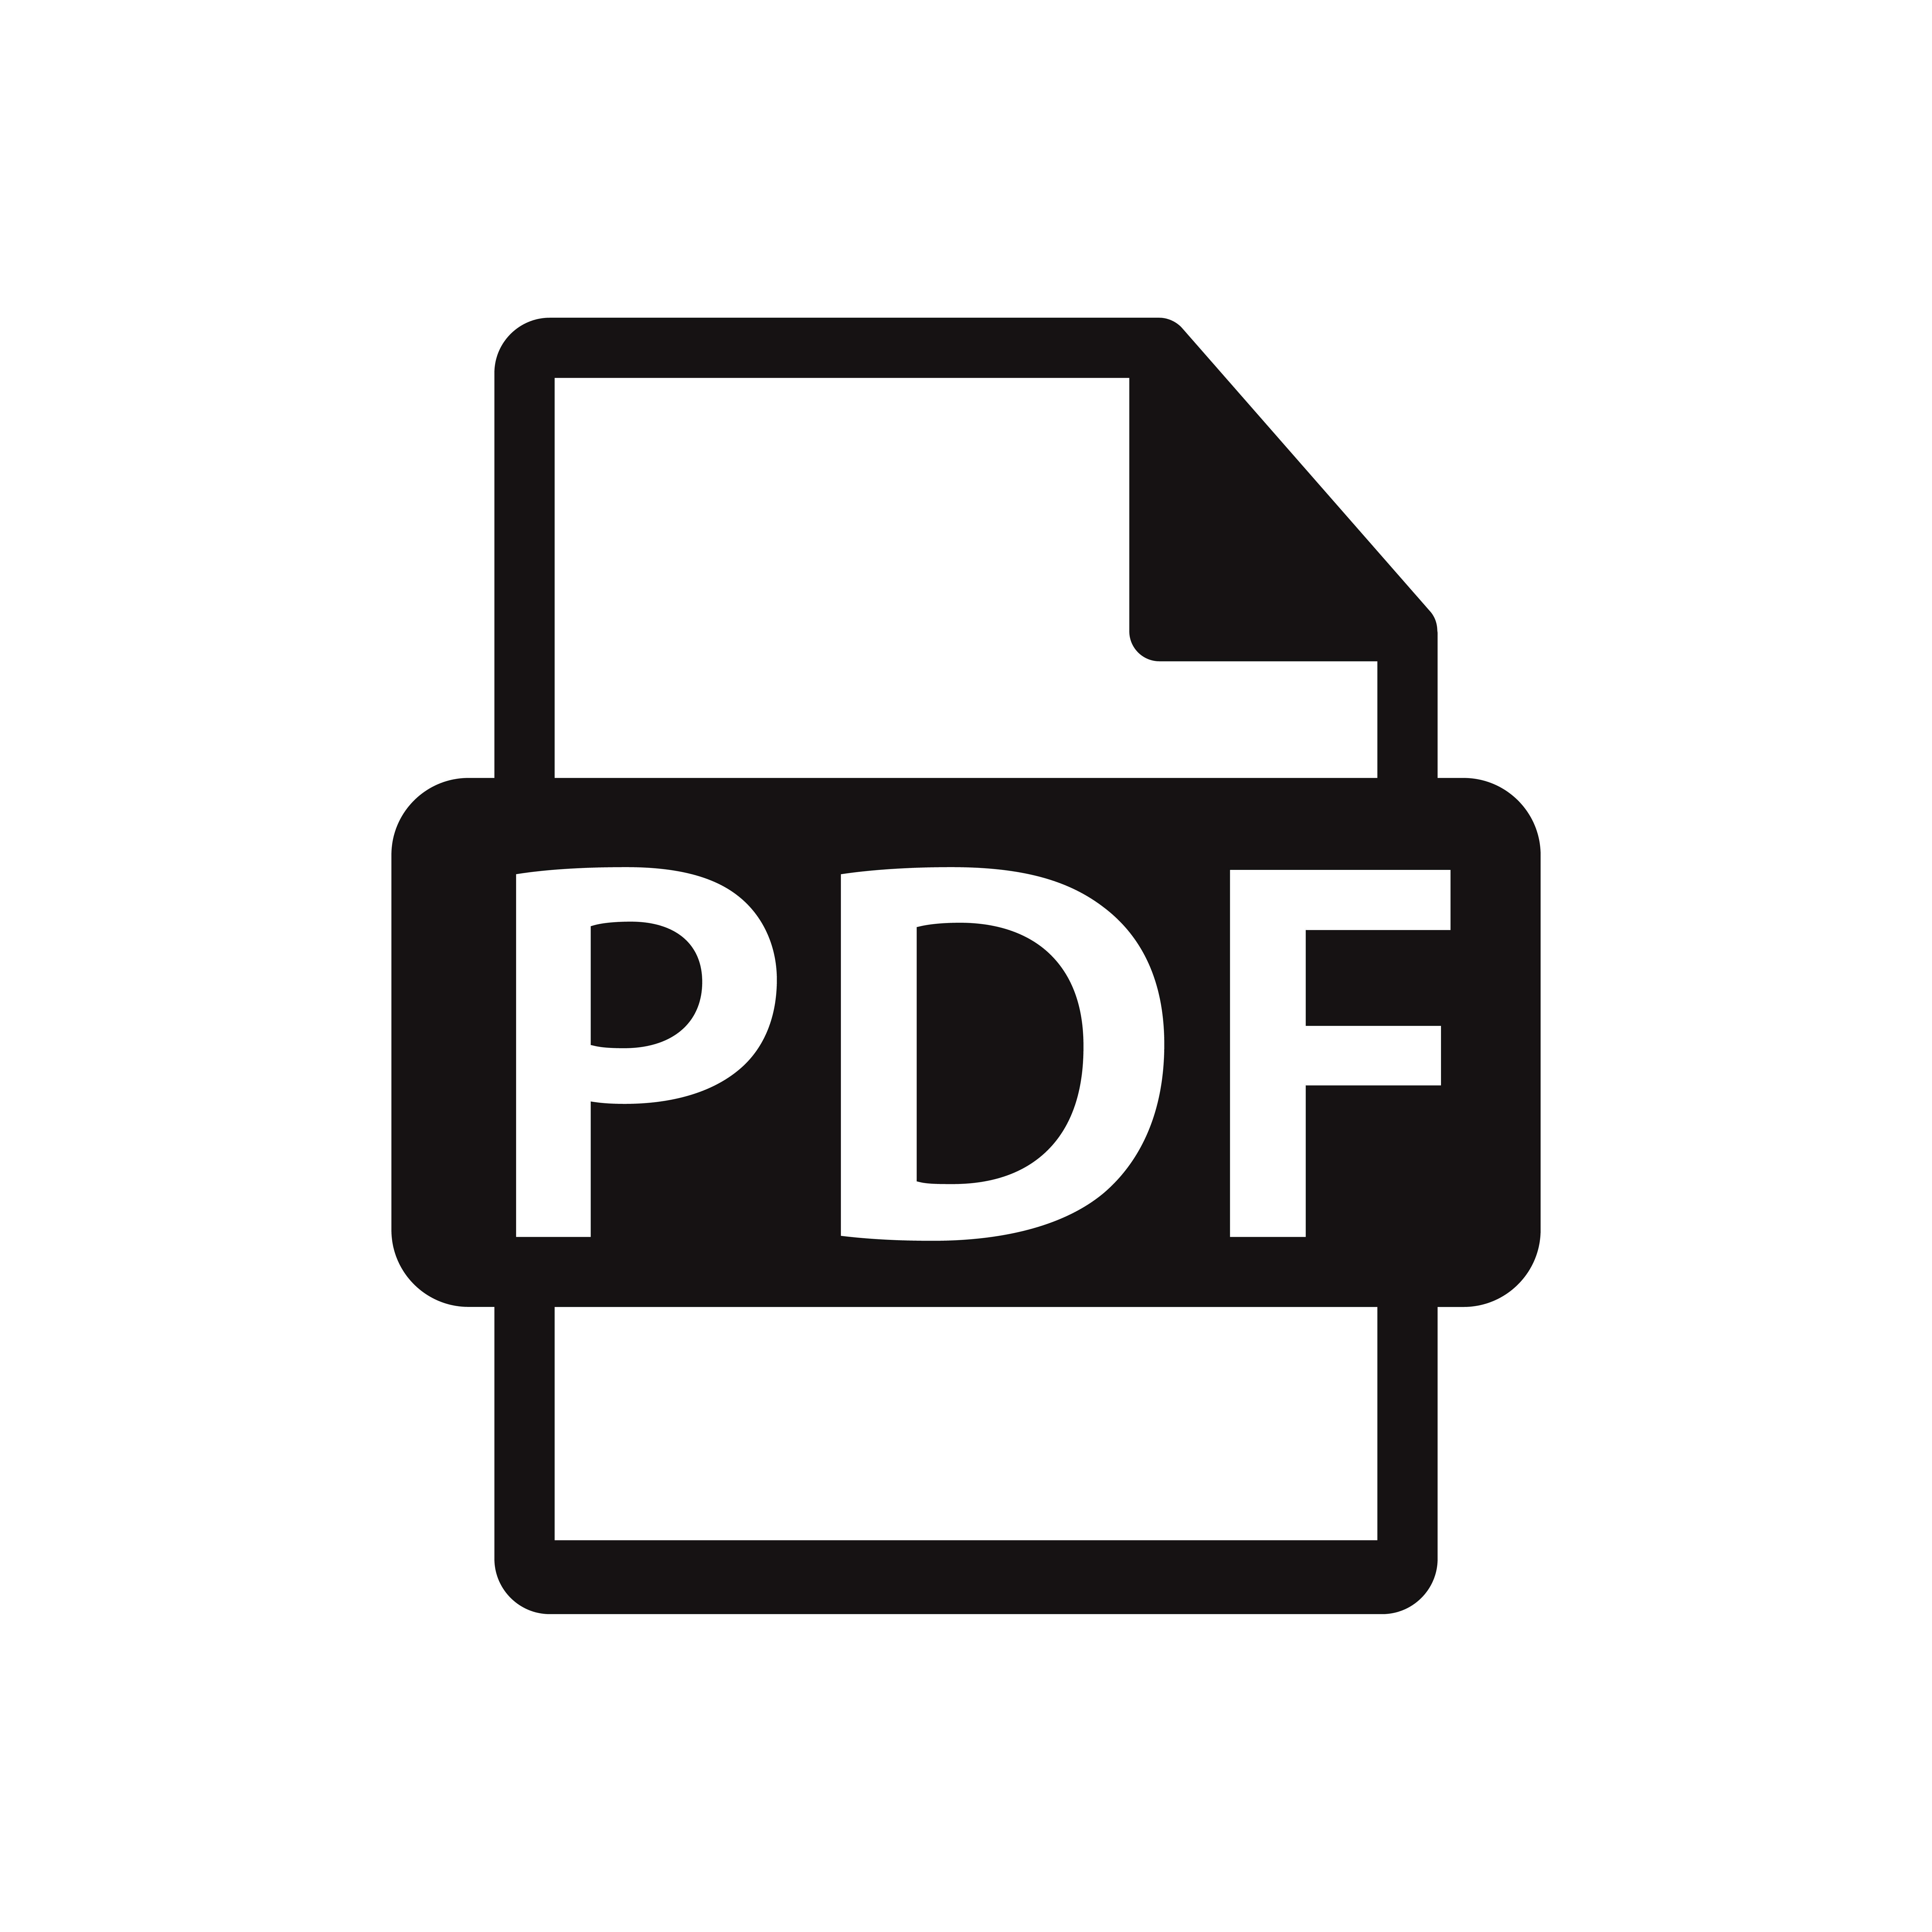 Pdf icon. Знак pdf. Иконка pdf. Пиктограмма pdf. Иконка pdf файла.